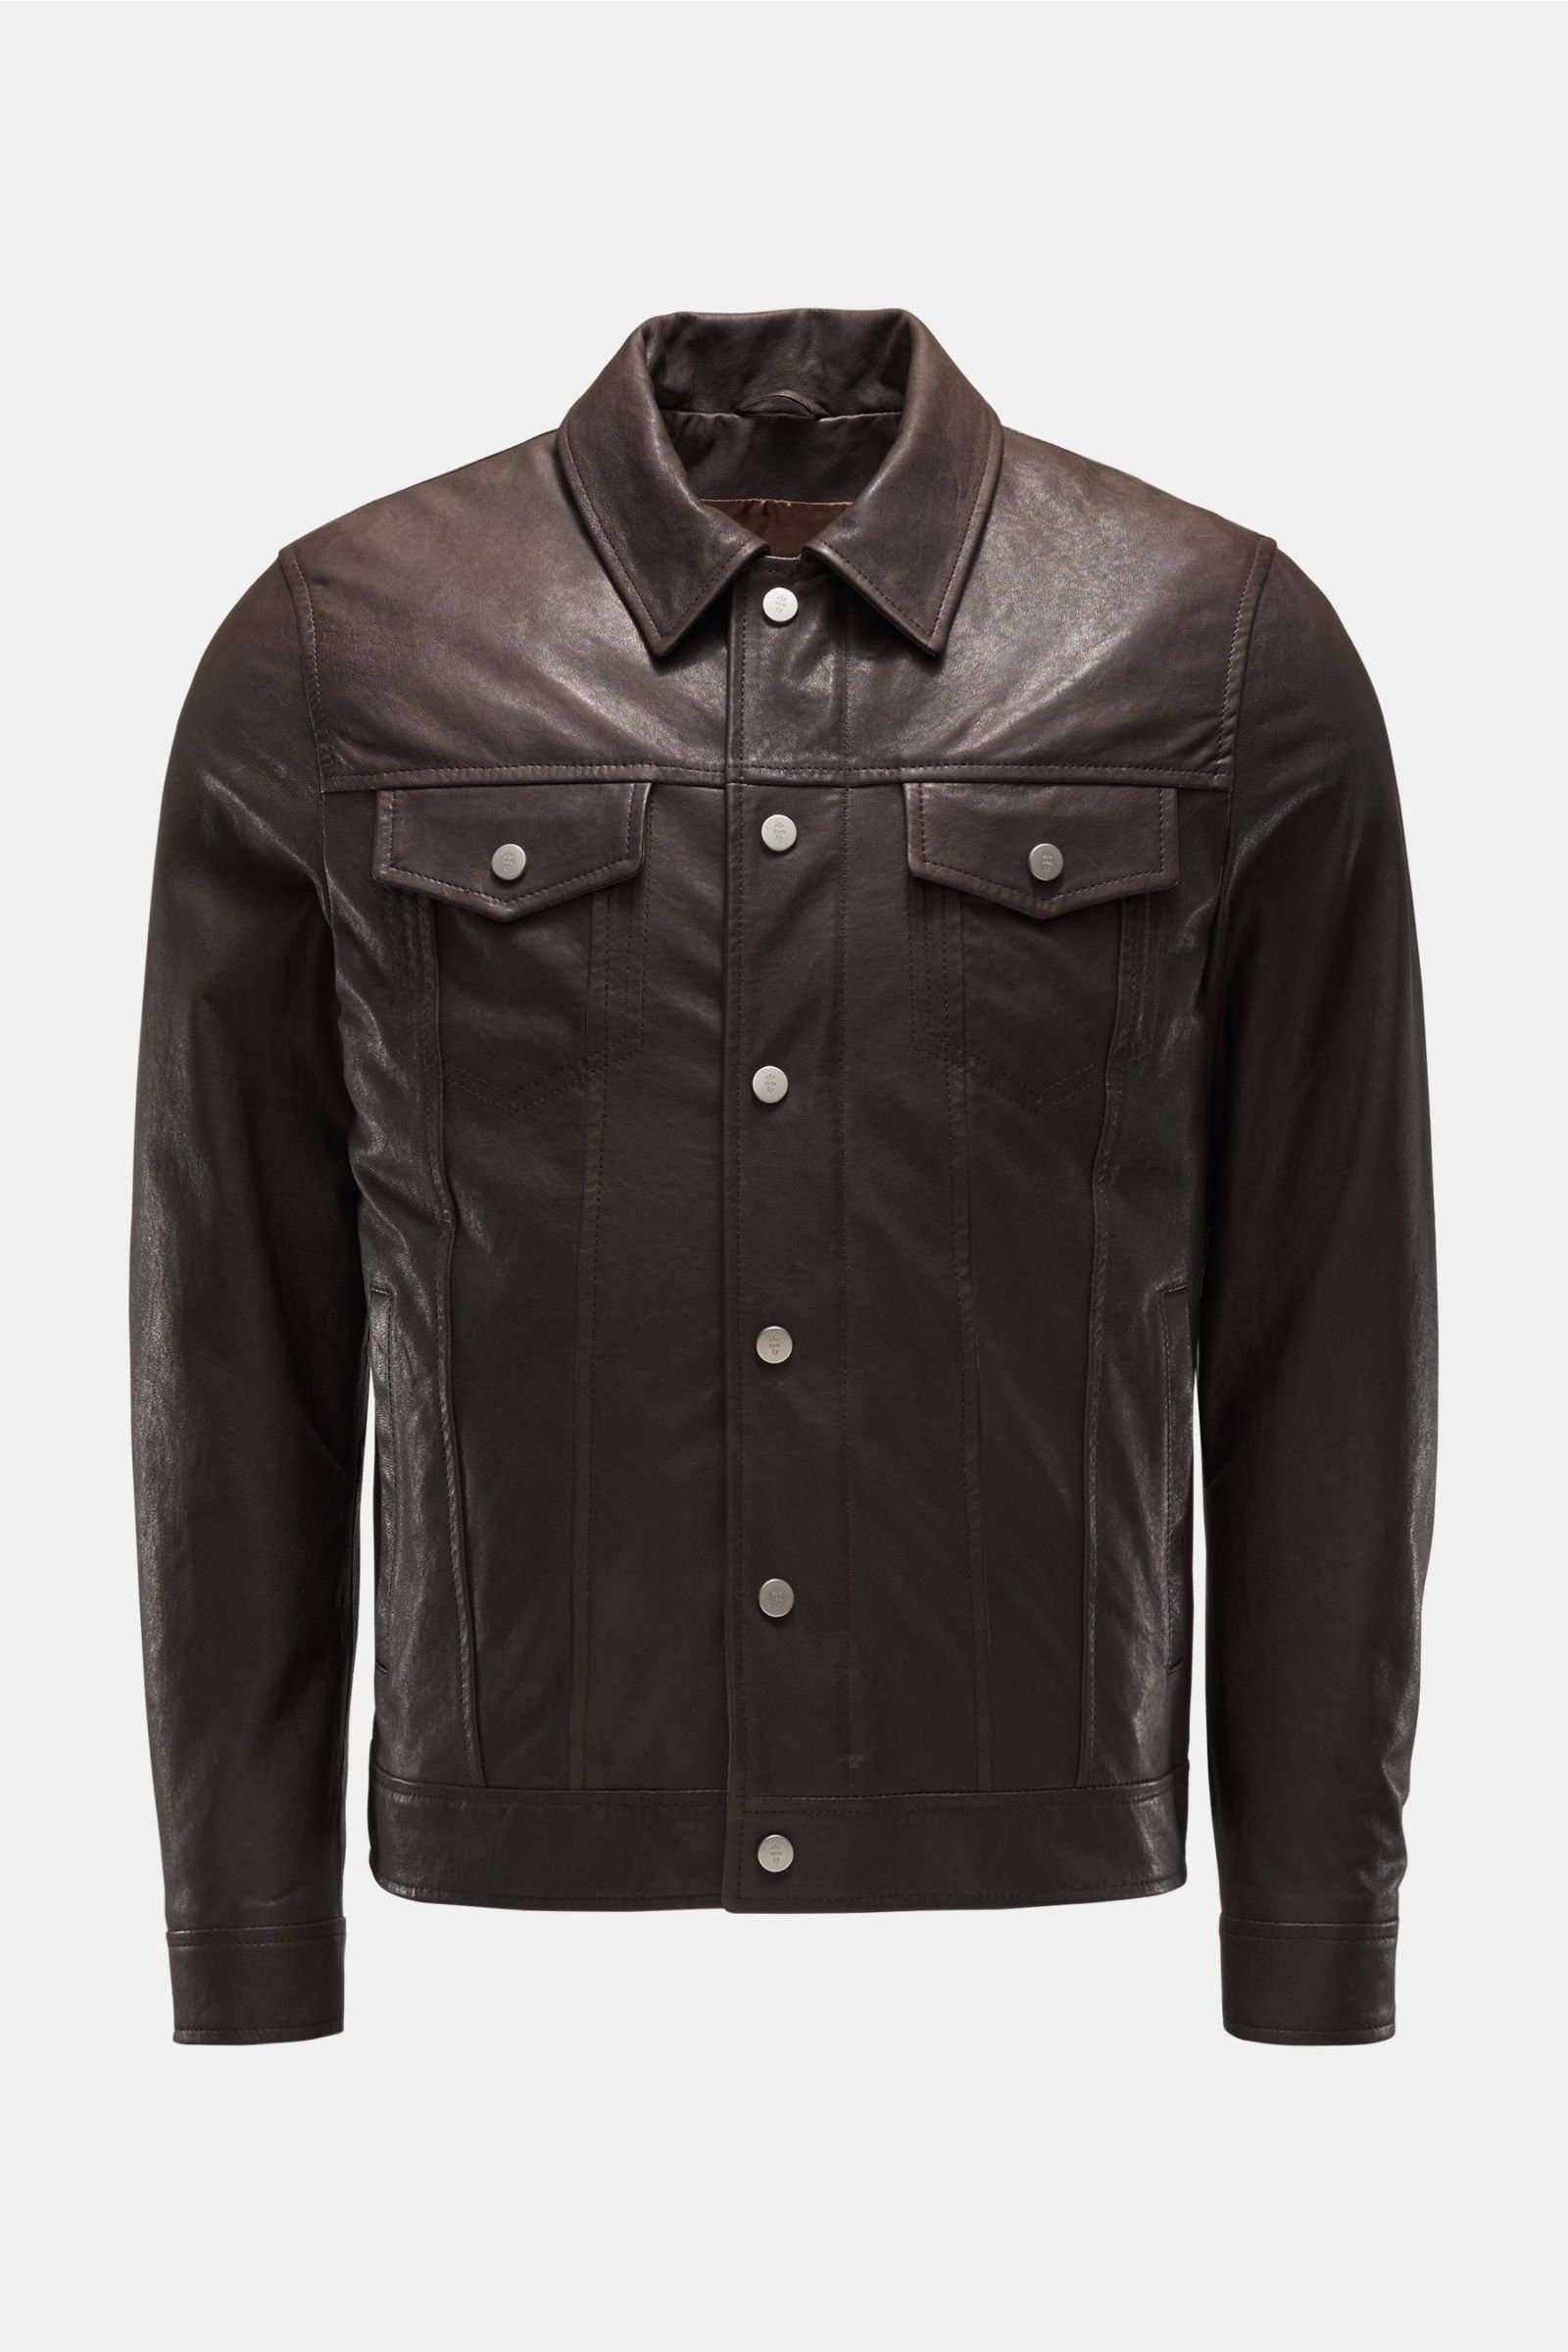 Leather jacket dark brown